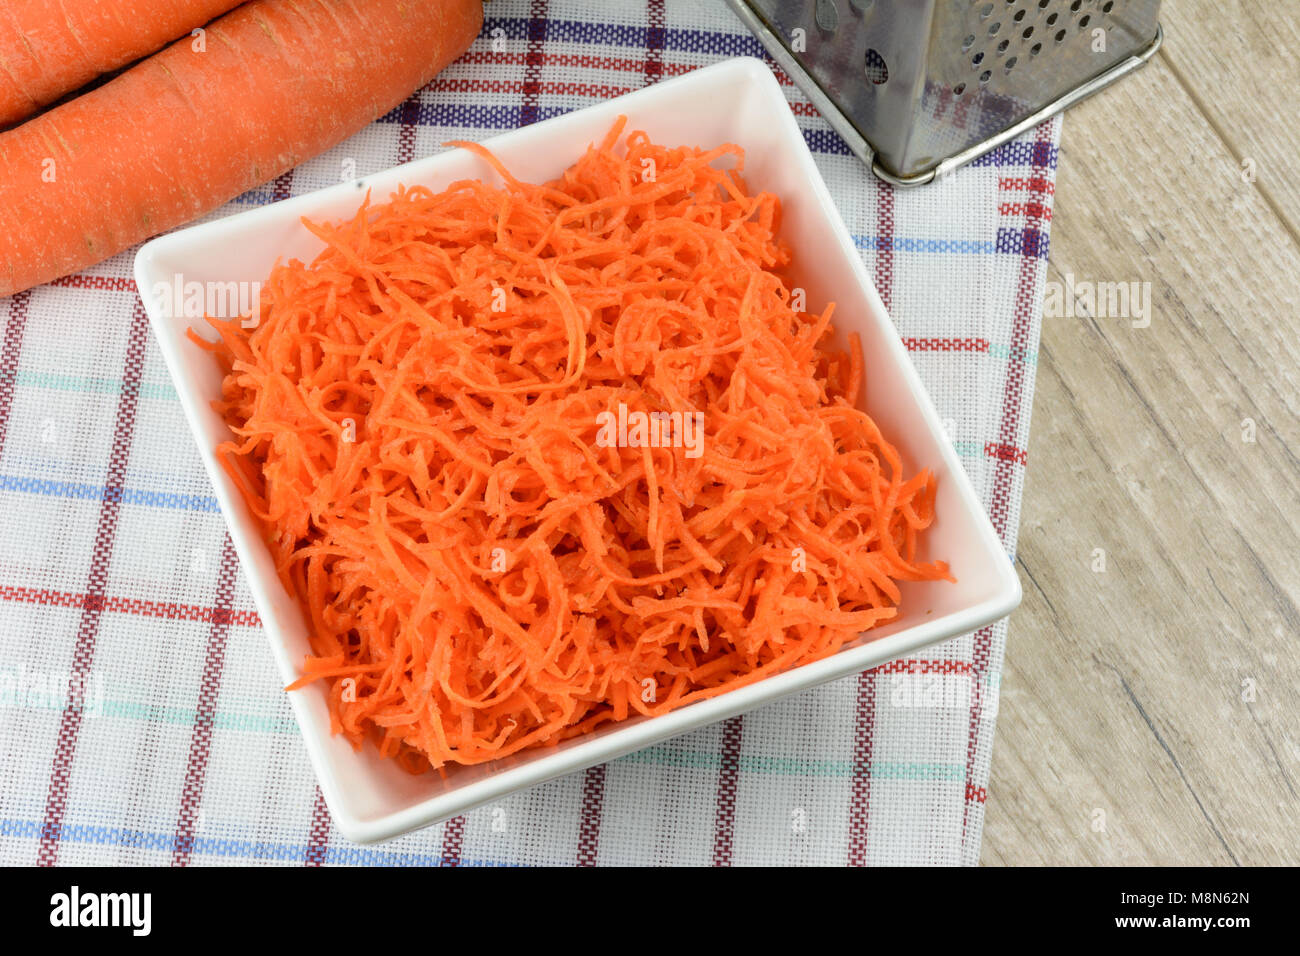 https://c8.alamy.com/comp/M8N62N/concept-of-preparing-a-healthy-salad-grated-carrot-in-a-white-platter-M8N62N.jpg